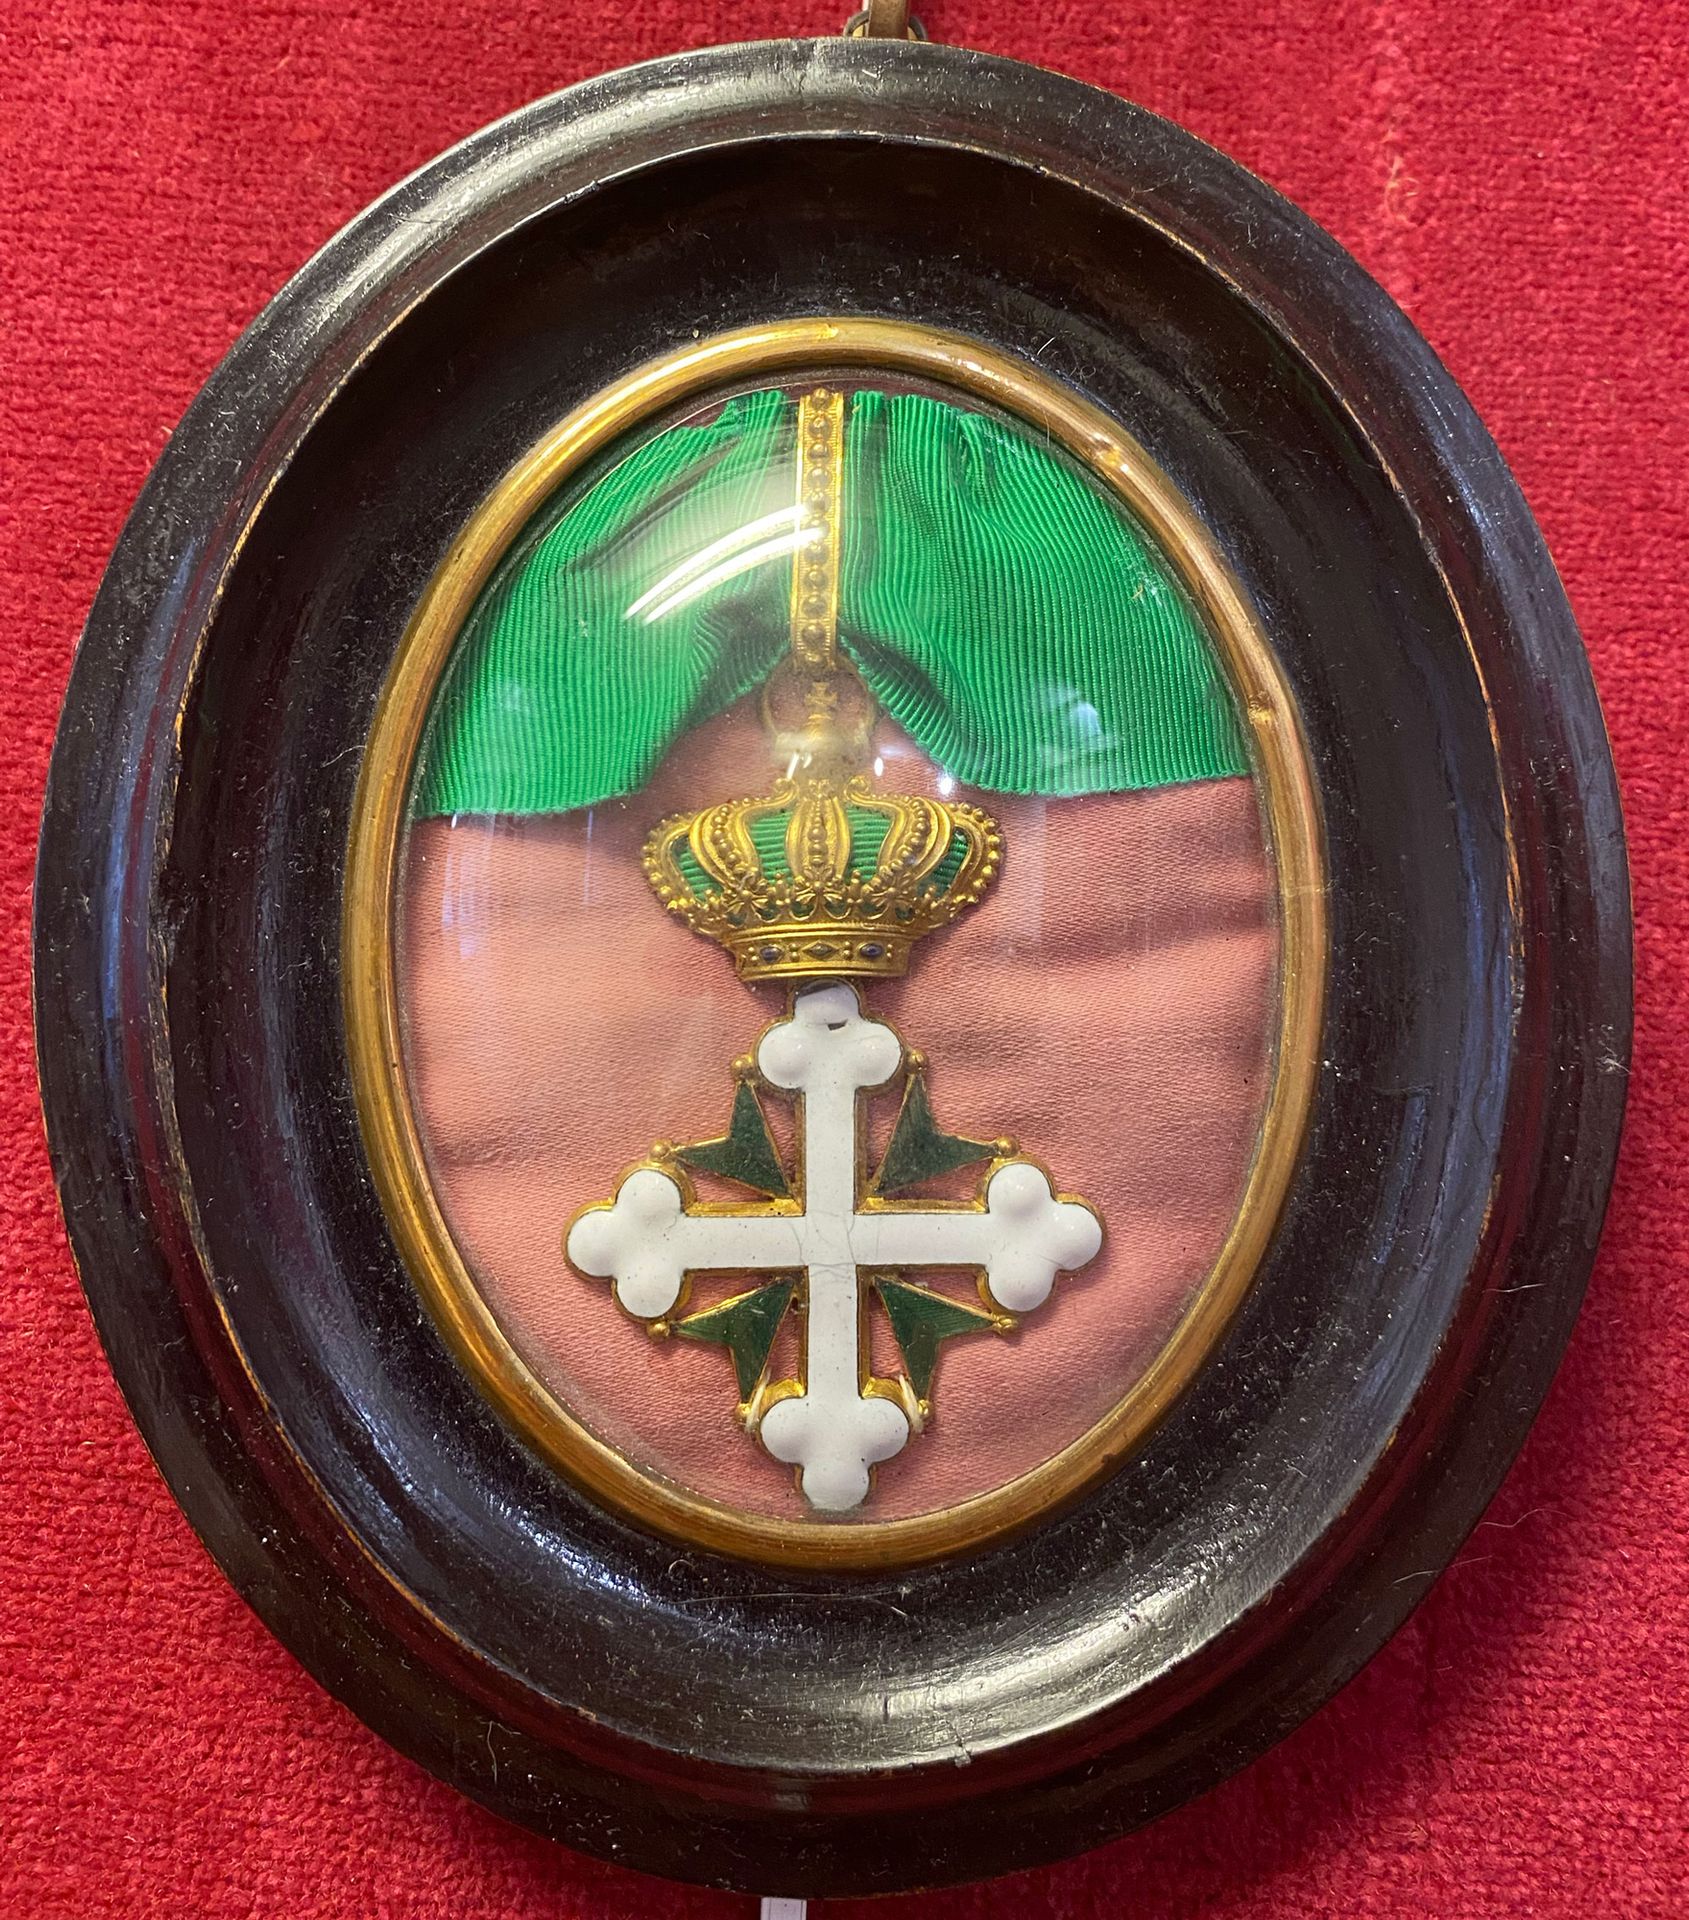 Null 意大利-毛里求斯和拉撒路圣徒勋章，成立于1572年，第二类指挥官十字勋章，镀金青铜和珐琅的演示模型，呈现在一个椭圆形框架中。
75 x 49 mm
法&hellip;